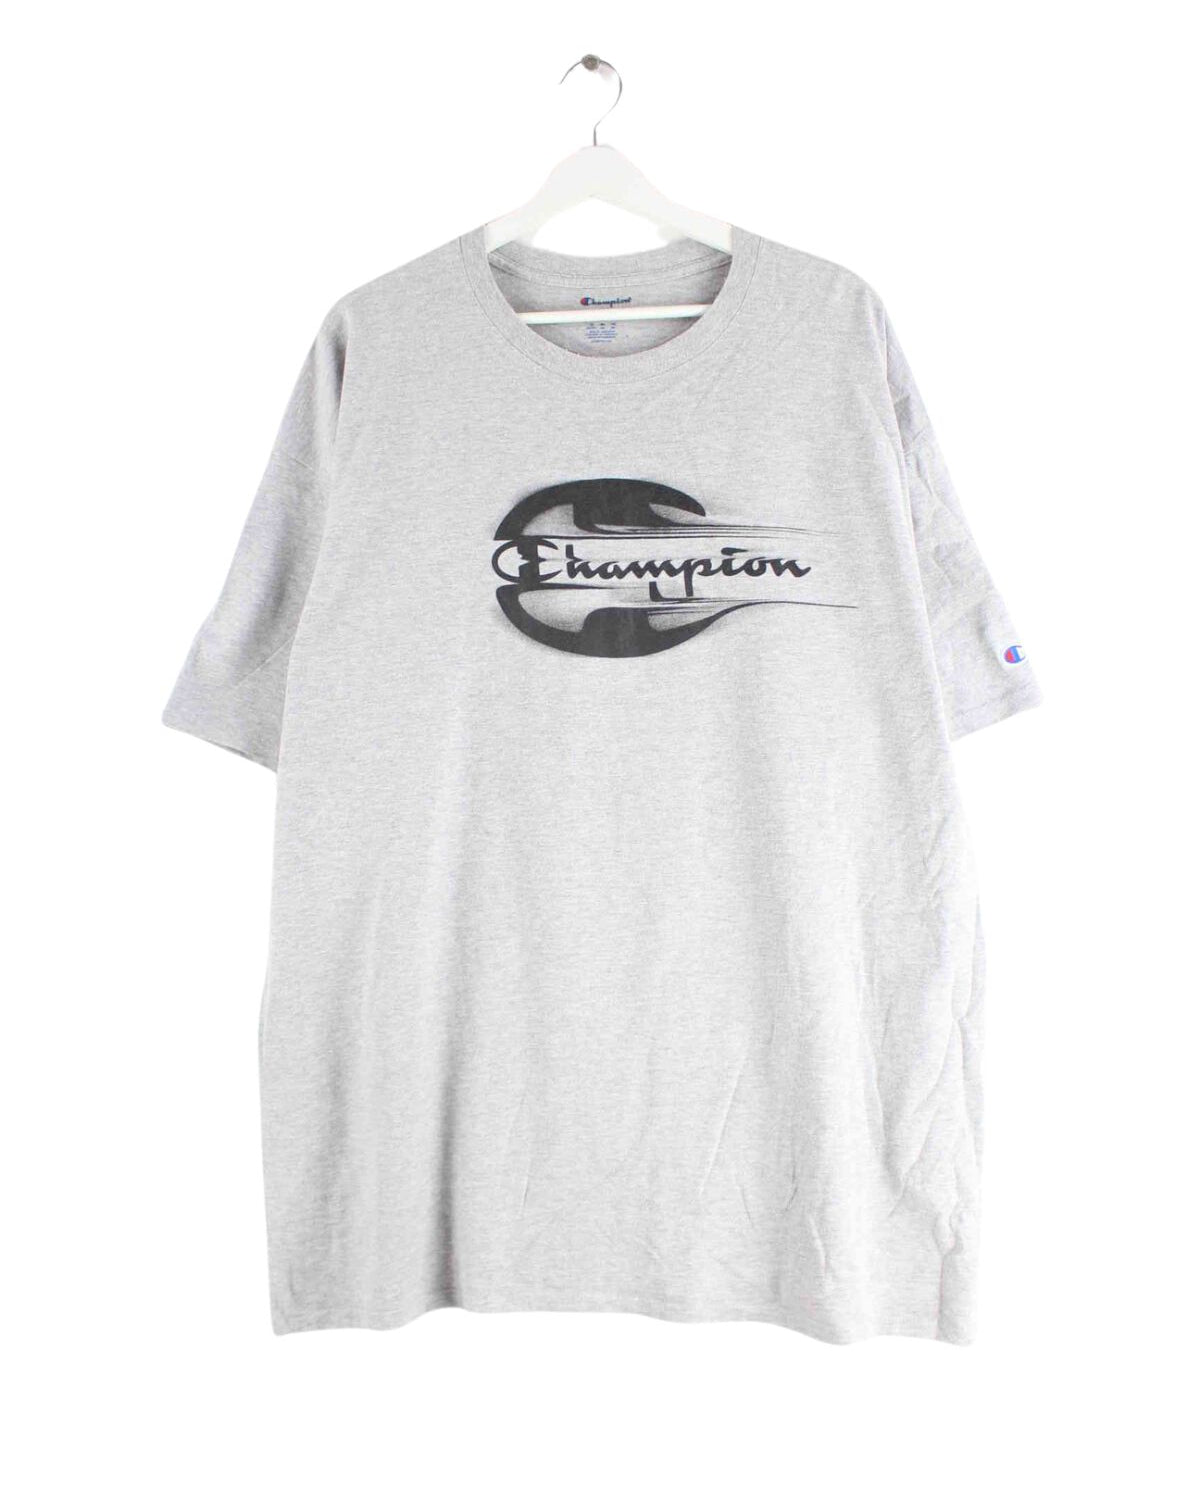 Champion Print T-Shirt Grau 3XL (front image)